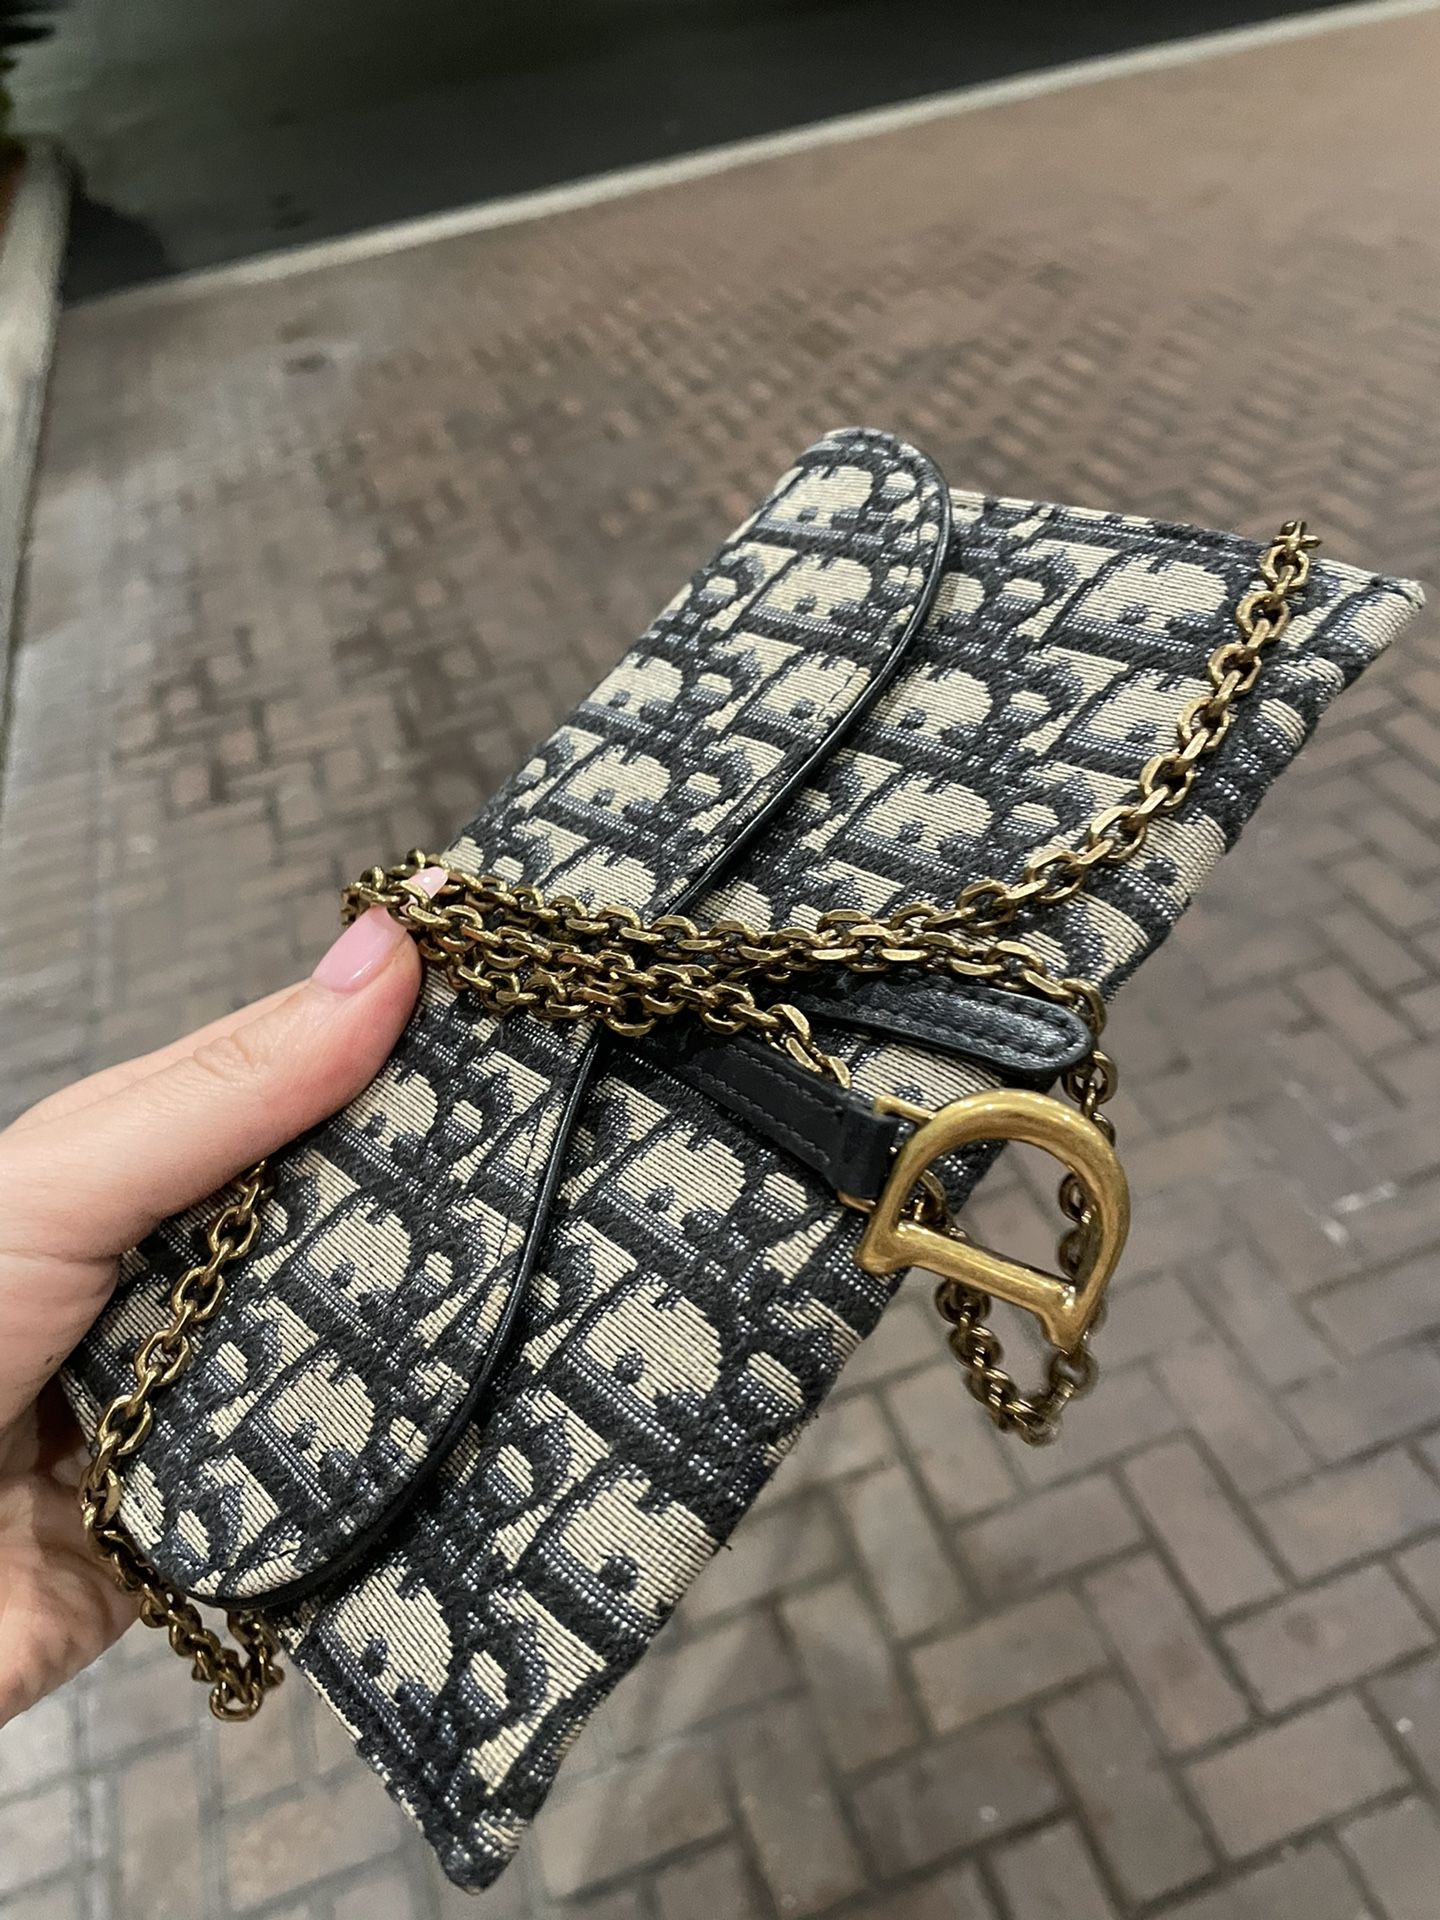 Authentic Dior Handbag